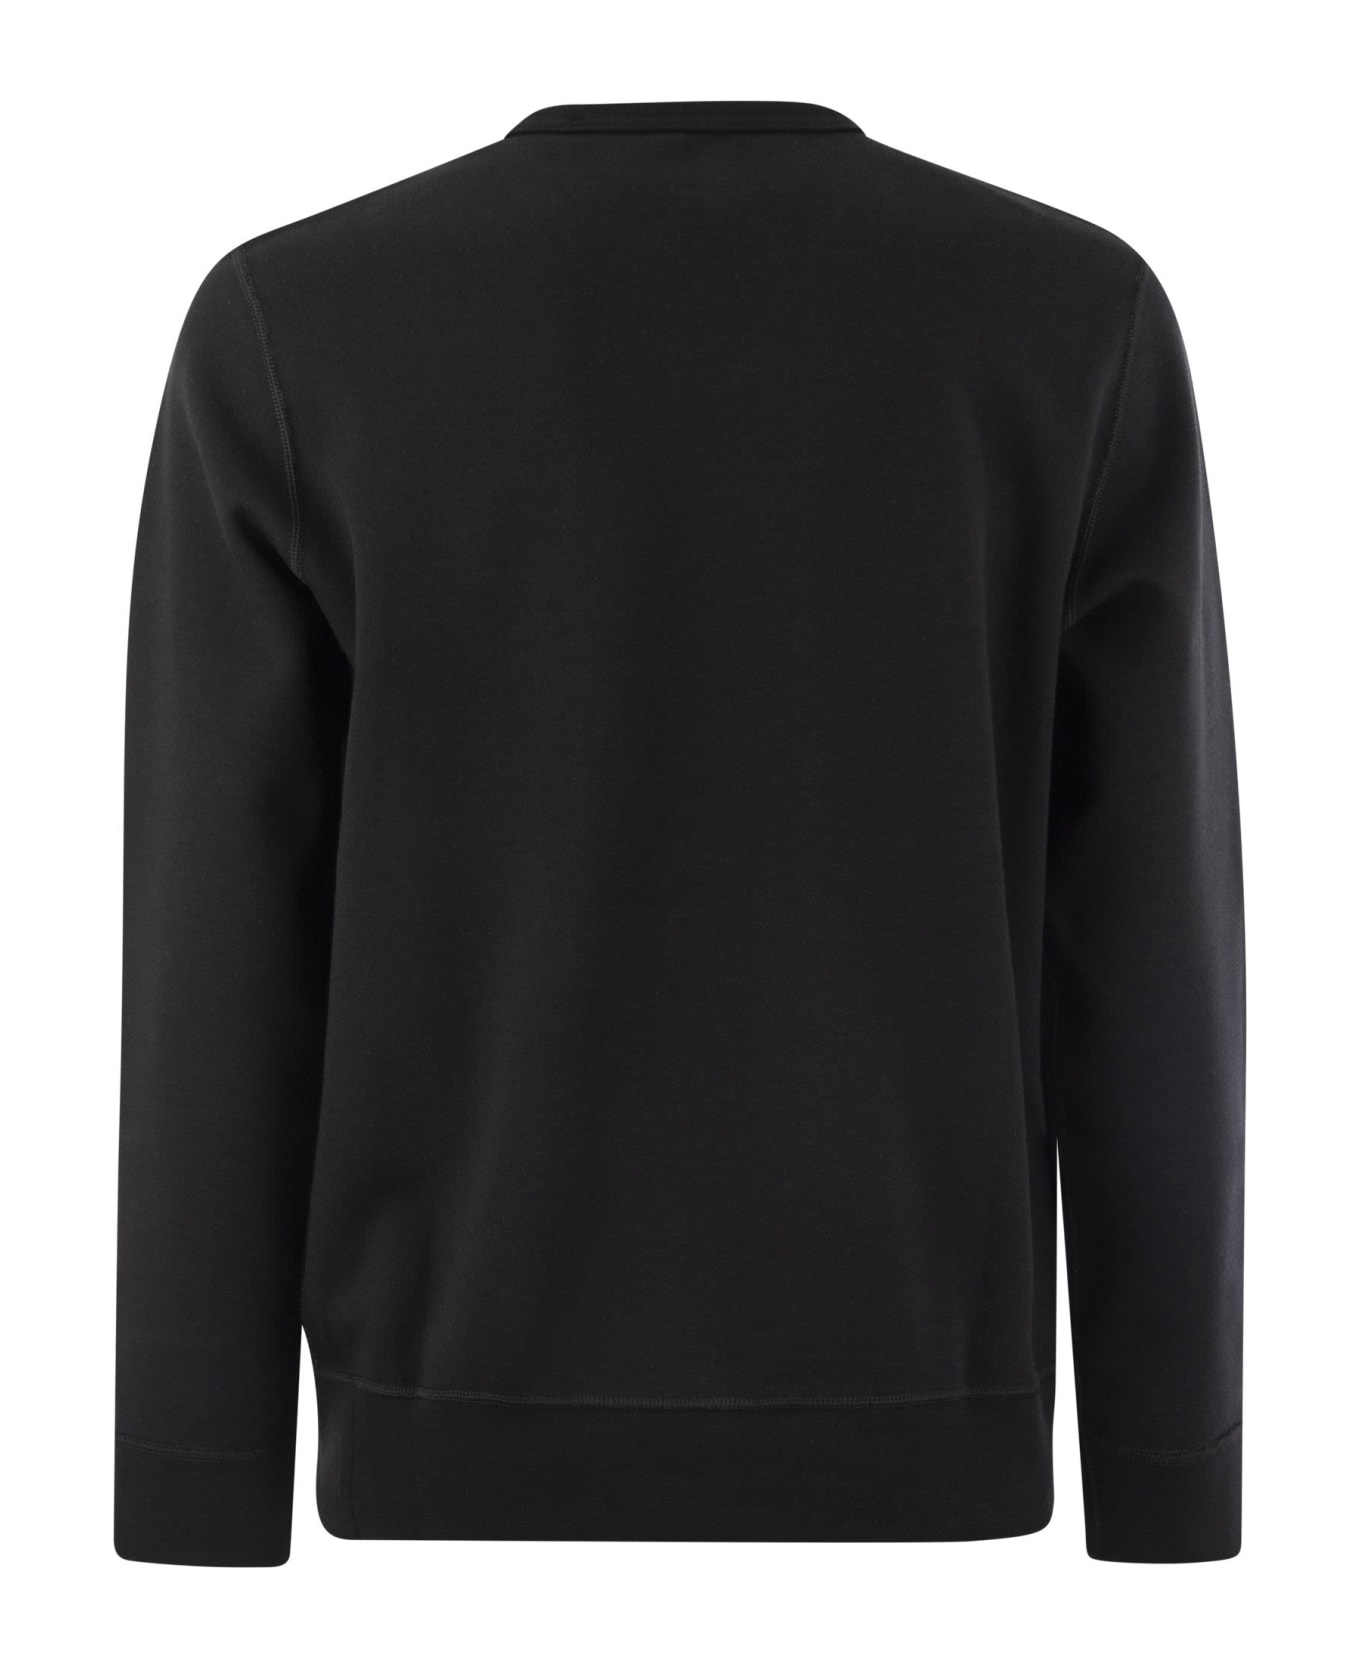 Polo Ralph Lauren Double Knit Crew Neck Sweatshirt - Black